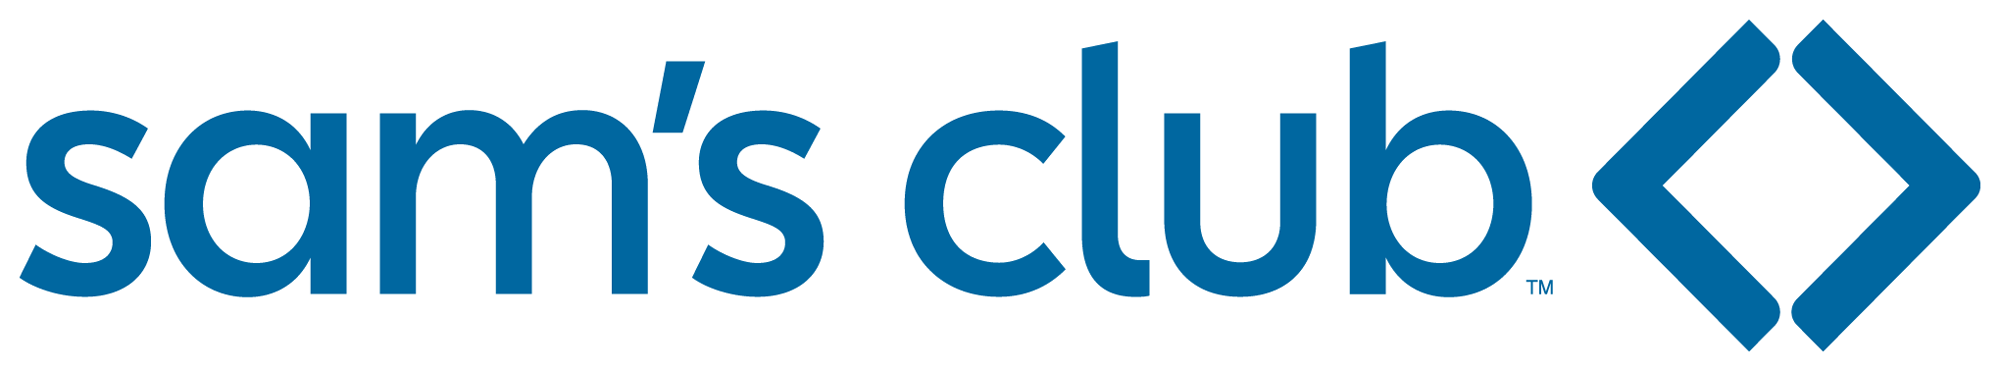 Sam's Club Brand Logo